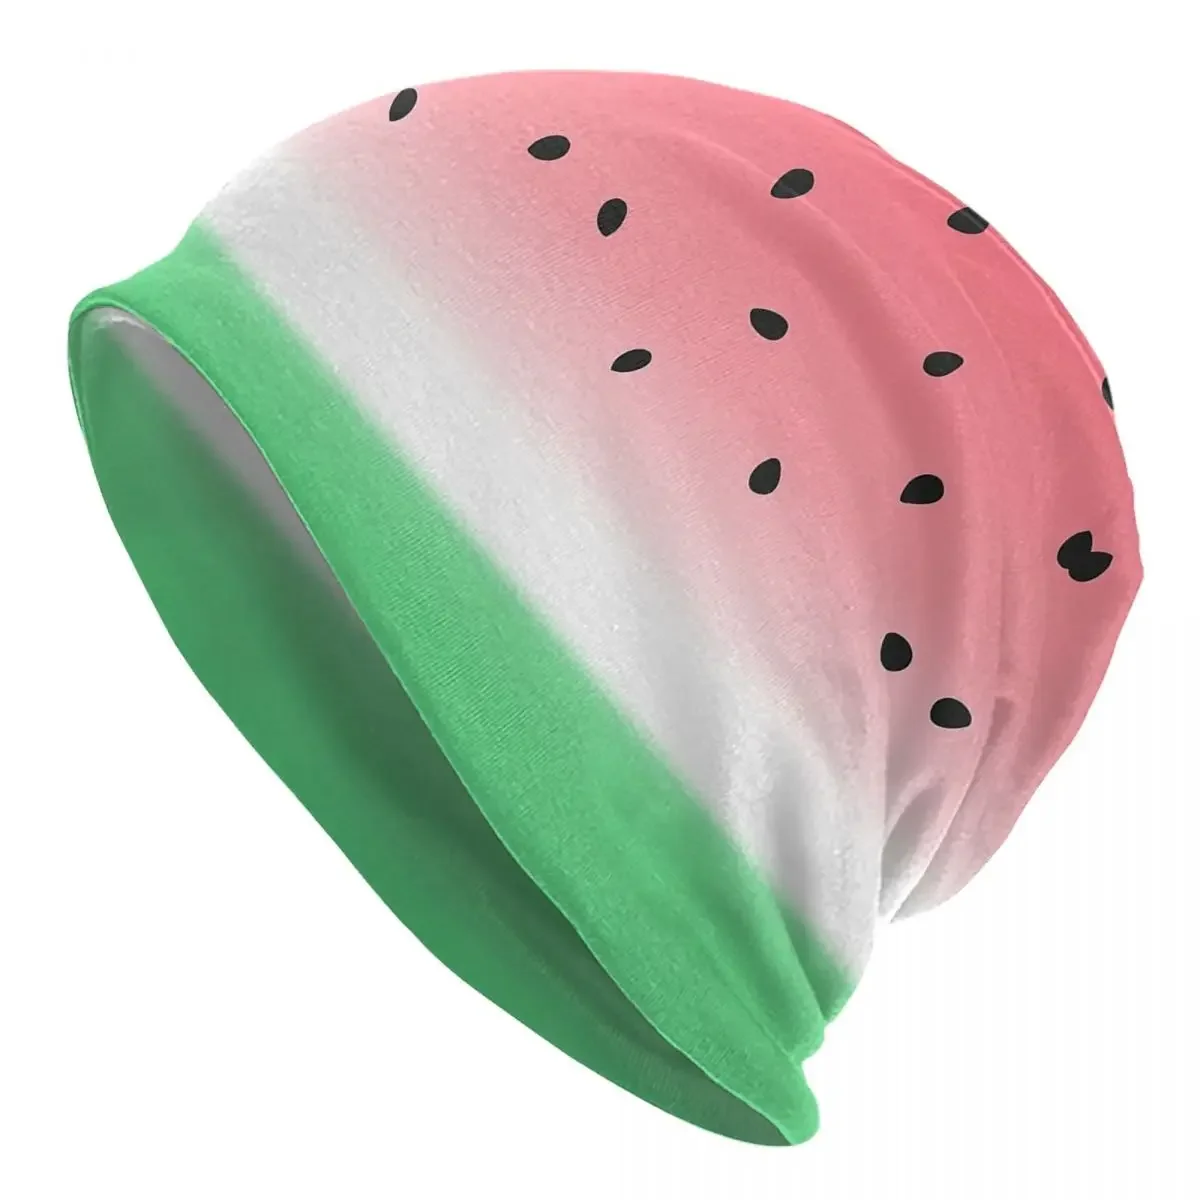 

Watermelon Ombre Stripes Warm Knitted Cap Hip Hop Bonnet Hat Autumn Winter Outdoor Beanies Hats for Unisex Adult